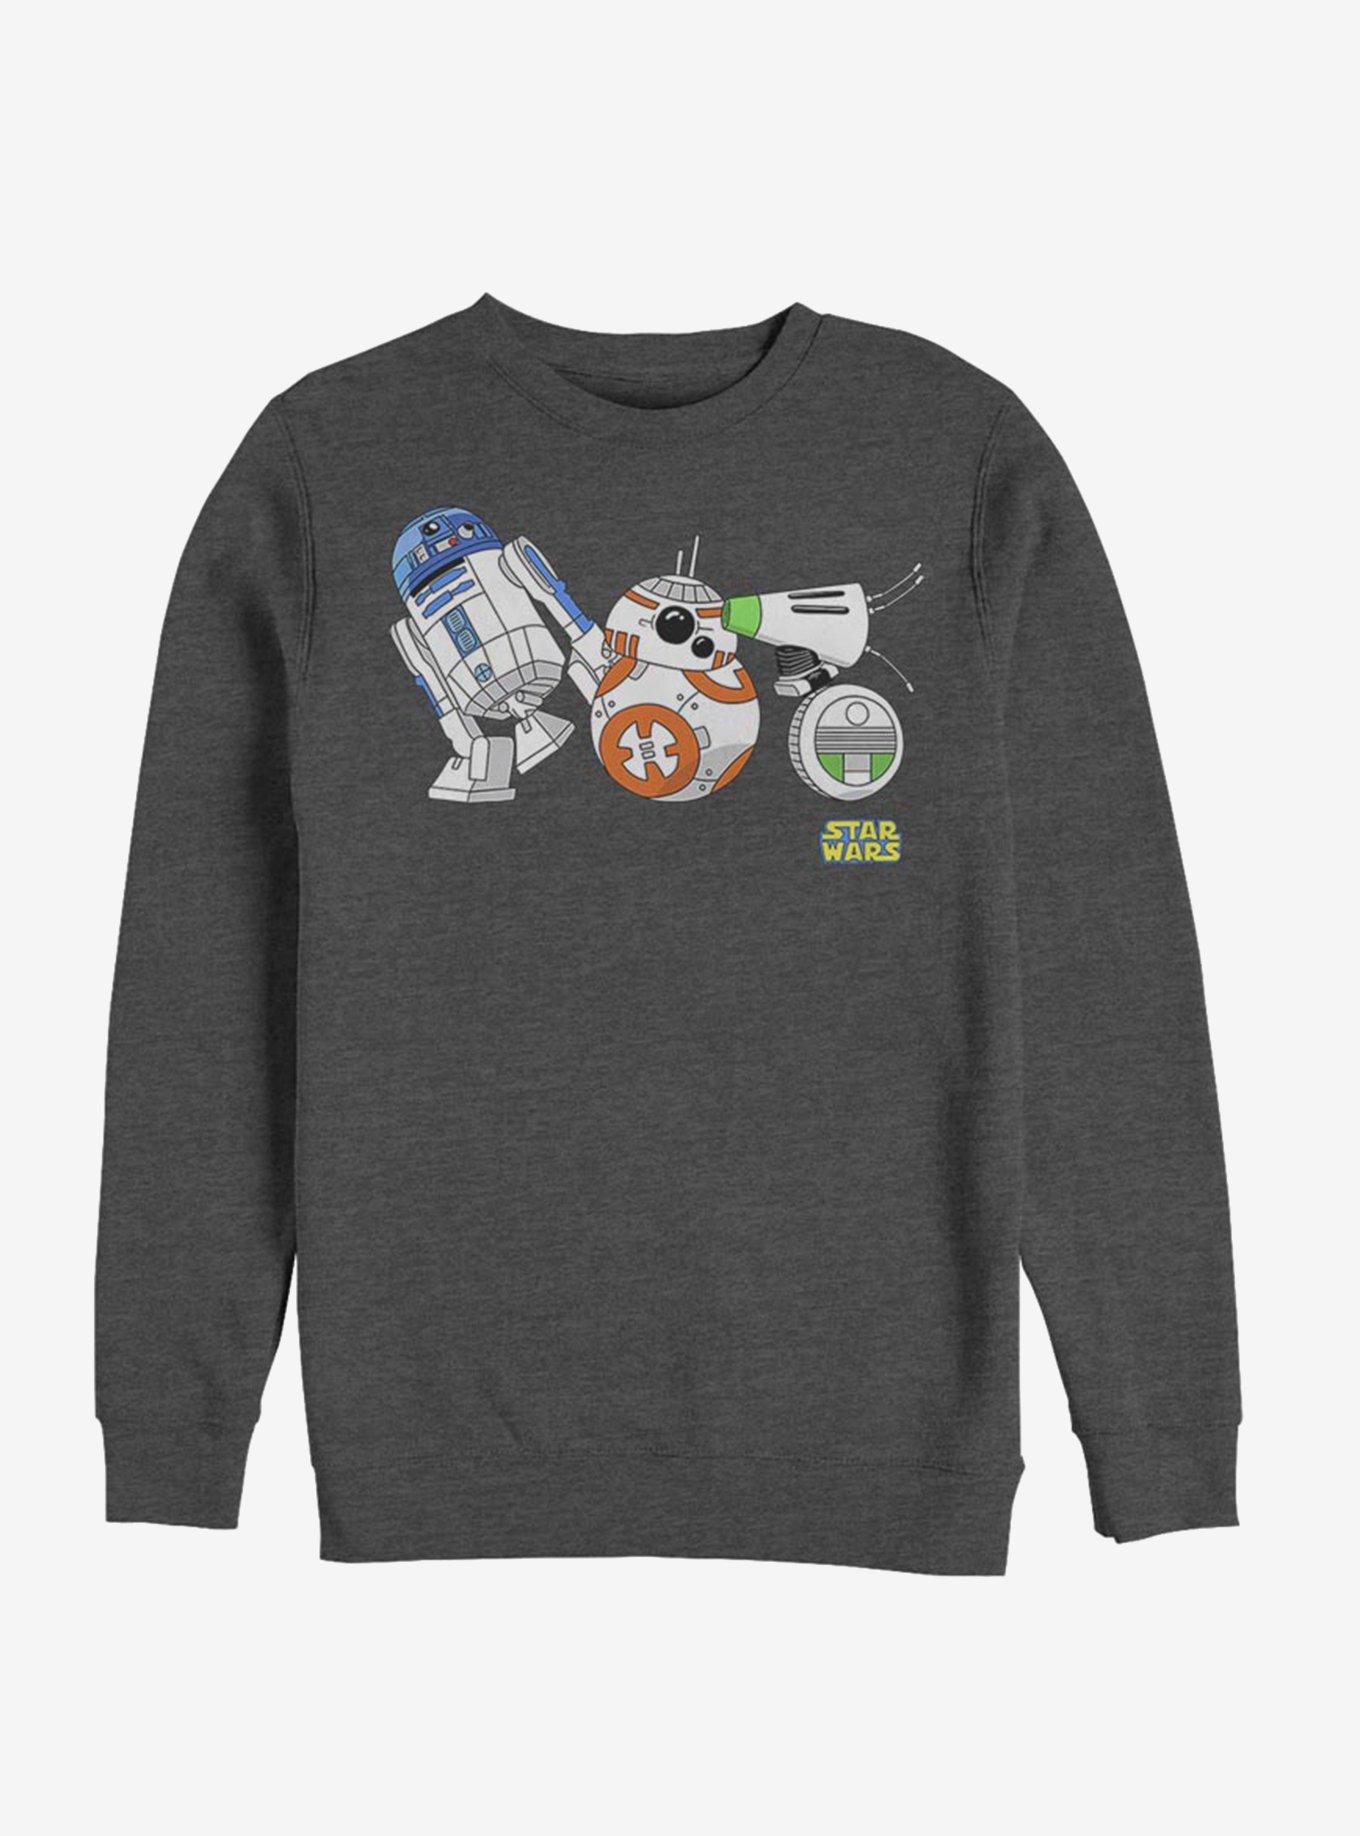 Star Wars Episode IX The Rise Of Skywalker Cartoon Droid Lineup Sweatshirt